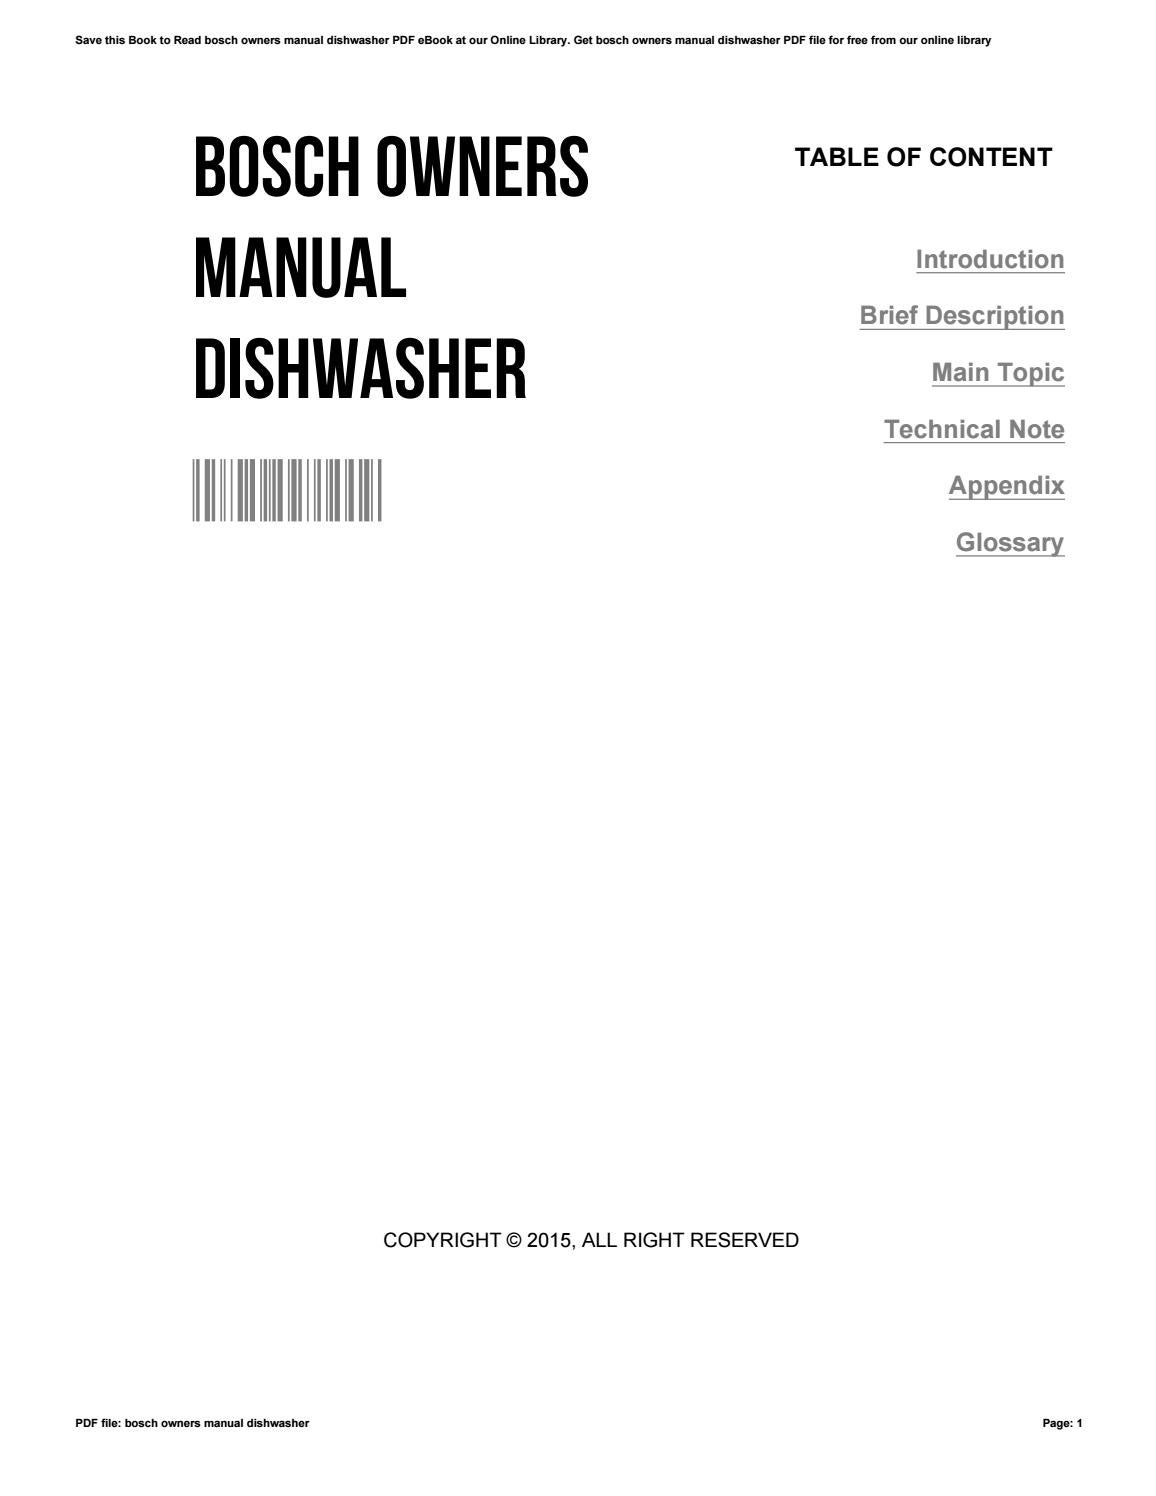 bosch 9000 dishwasher service manual